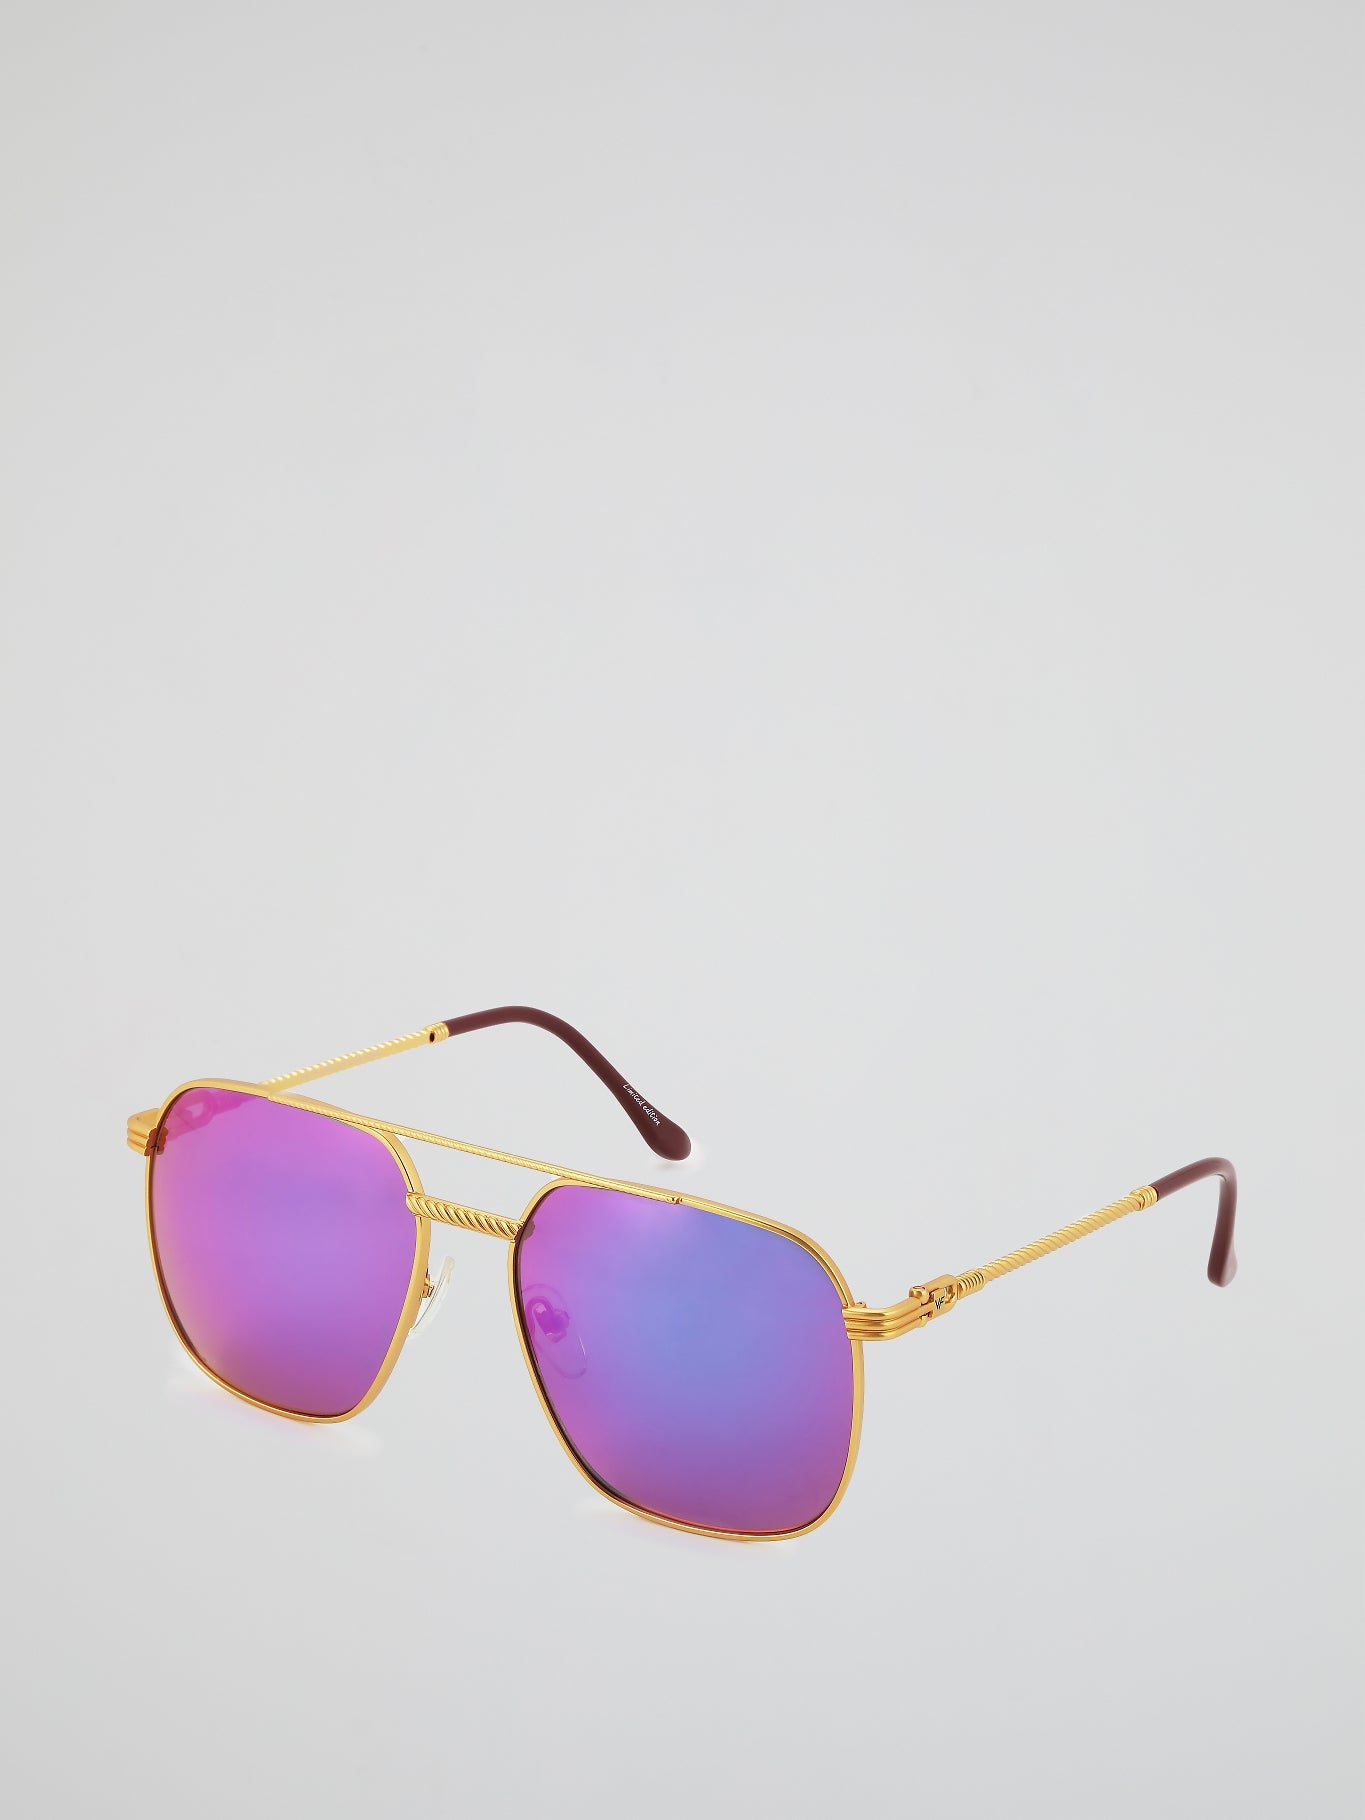 VF 034 Purple Mirror Lens Sunglasses